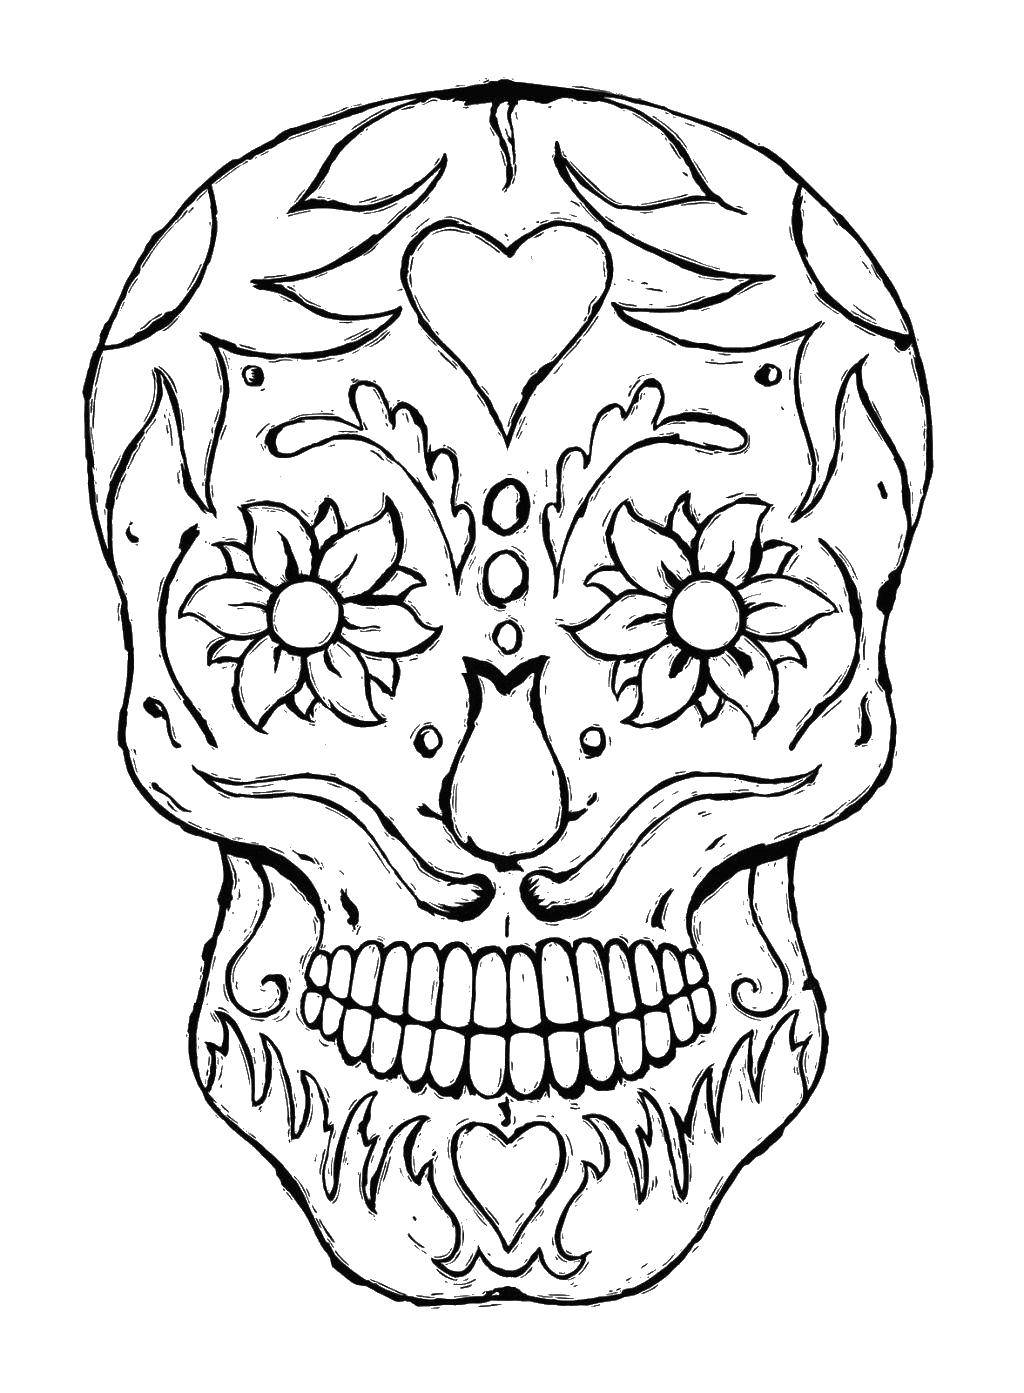 Coloring The skull patterns. Category Skull. Tags:  skull, patterns, flowers.